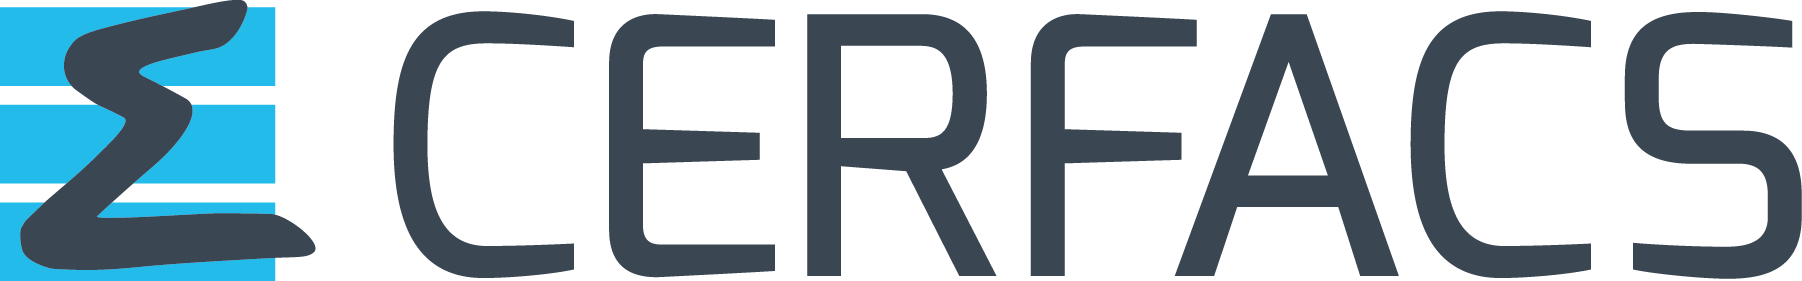 CERFACS (sponsor)